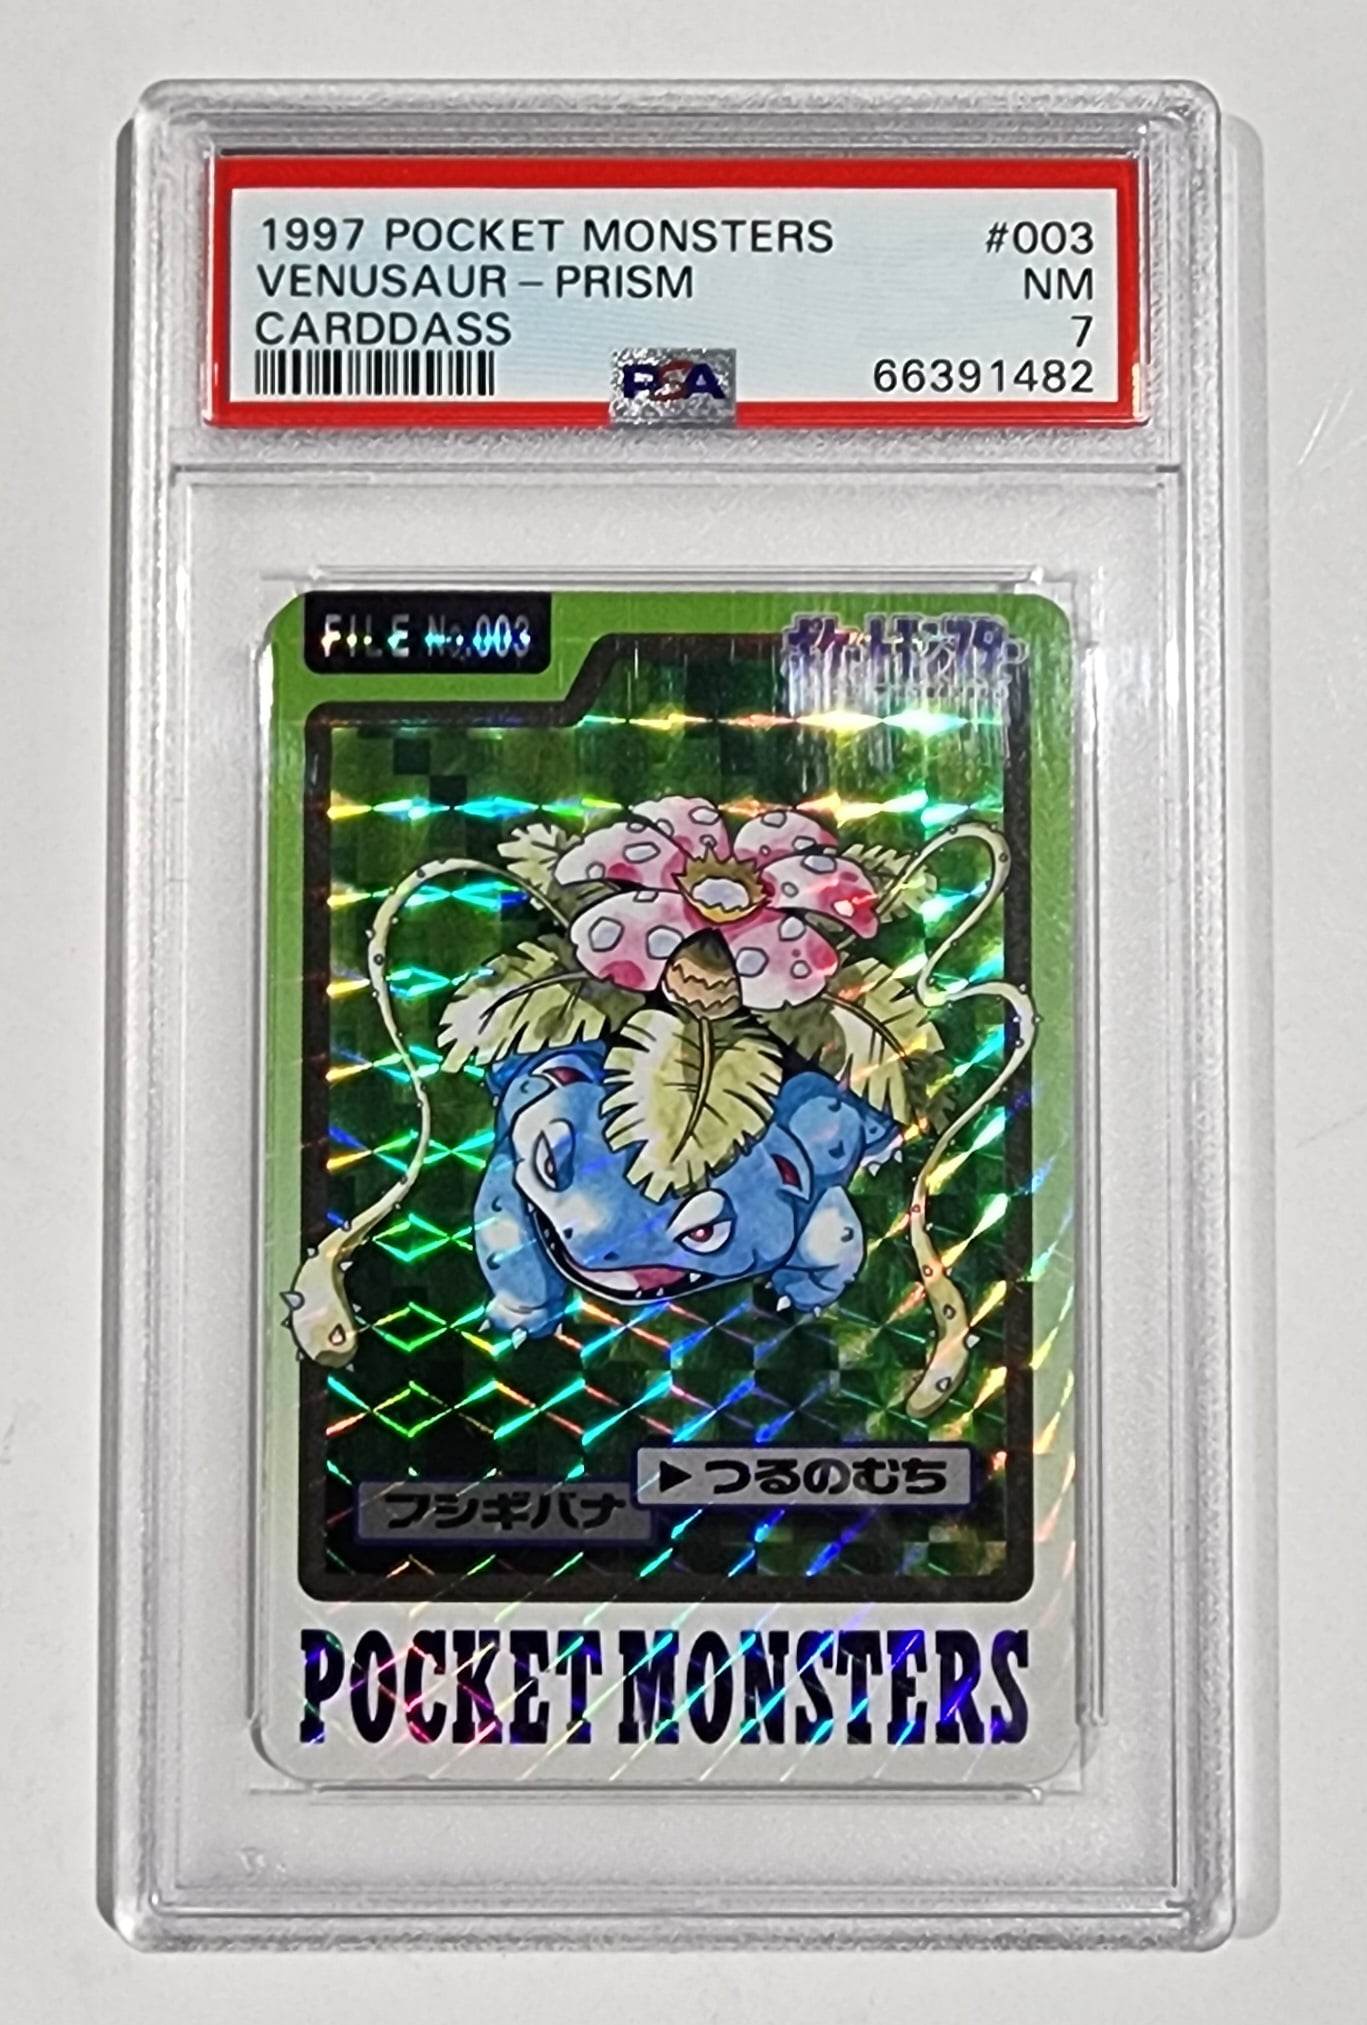 1997 Pokemon Japanese Pocket Monsters Venusaur #003 - Prism Carddass - PSA7